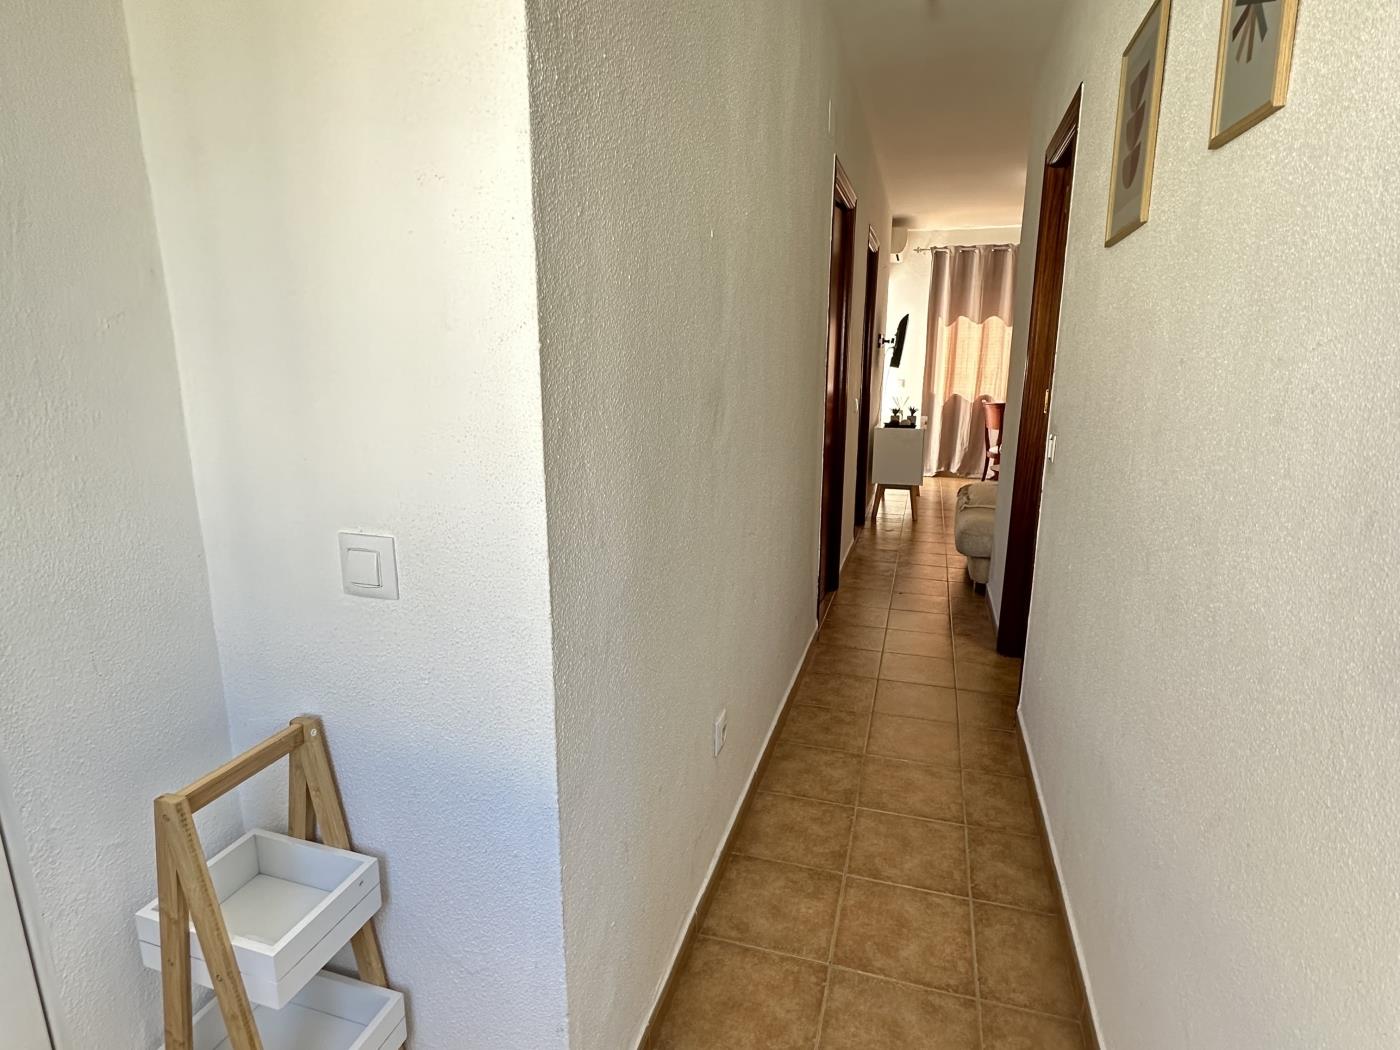 Ref. 27. Two-bedroom apartment on the first floor in Chiclana de la frontera